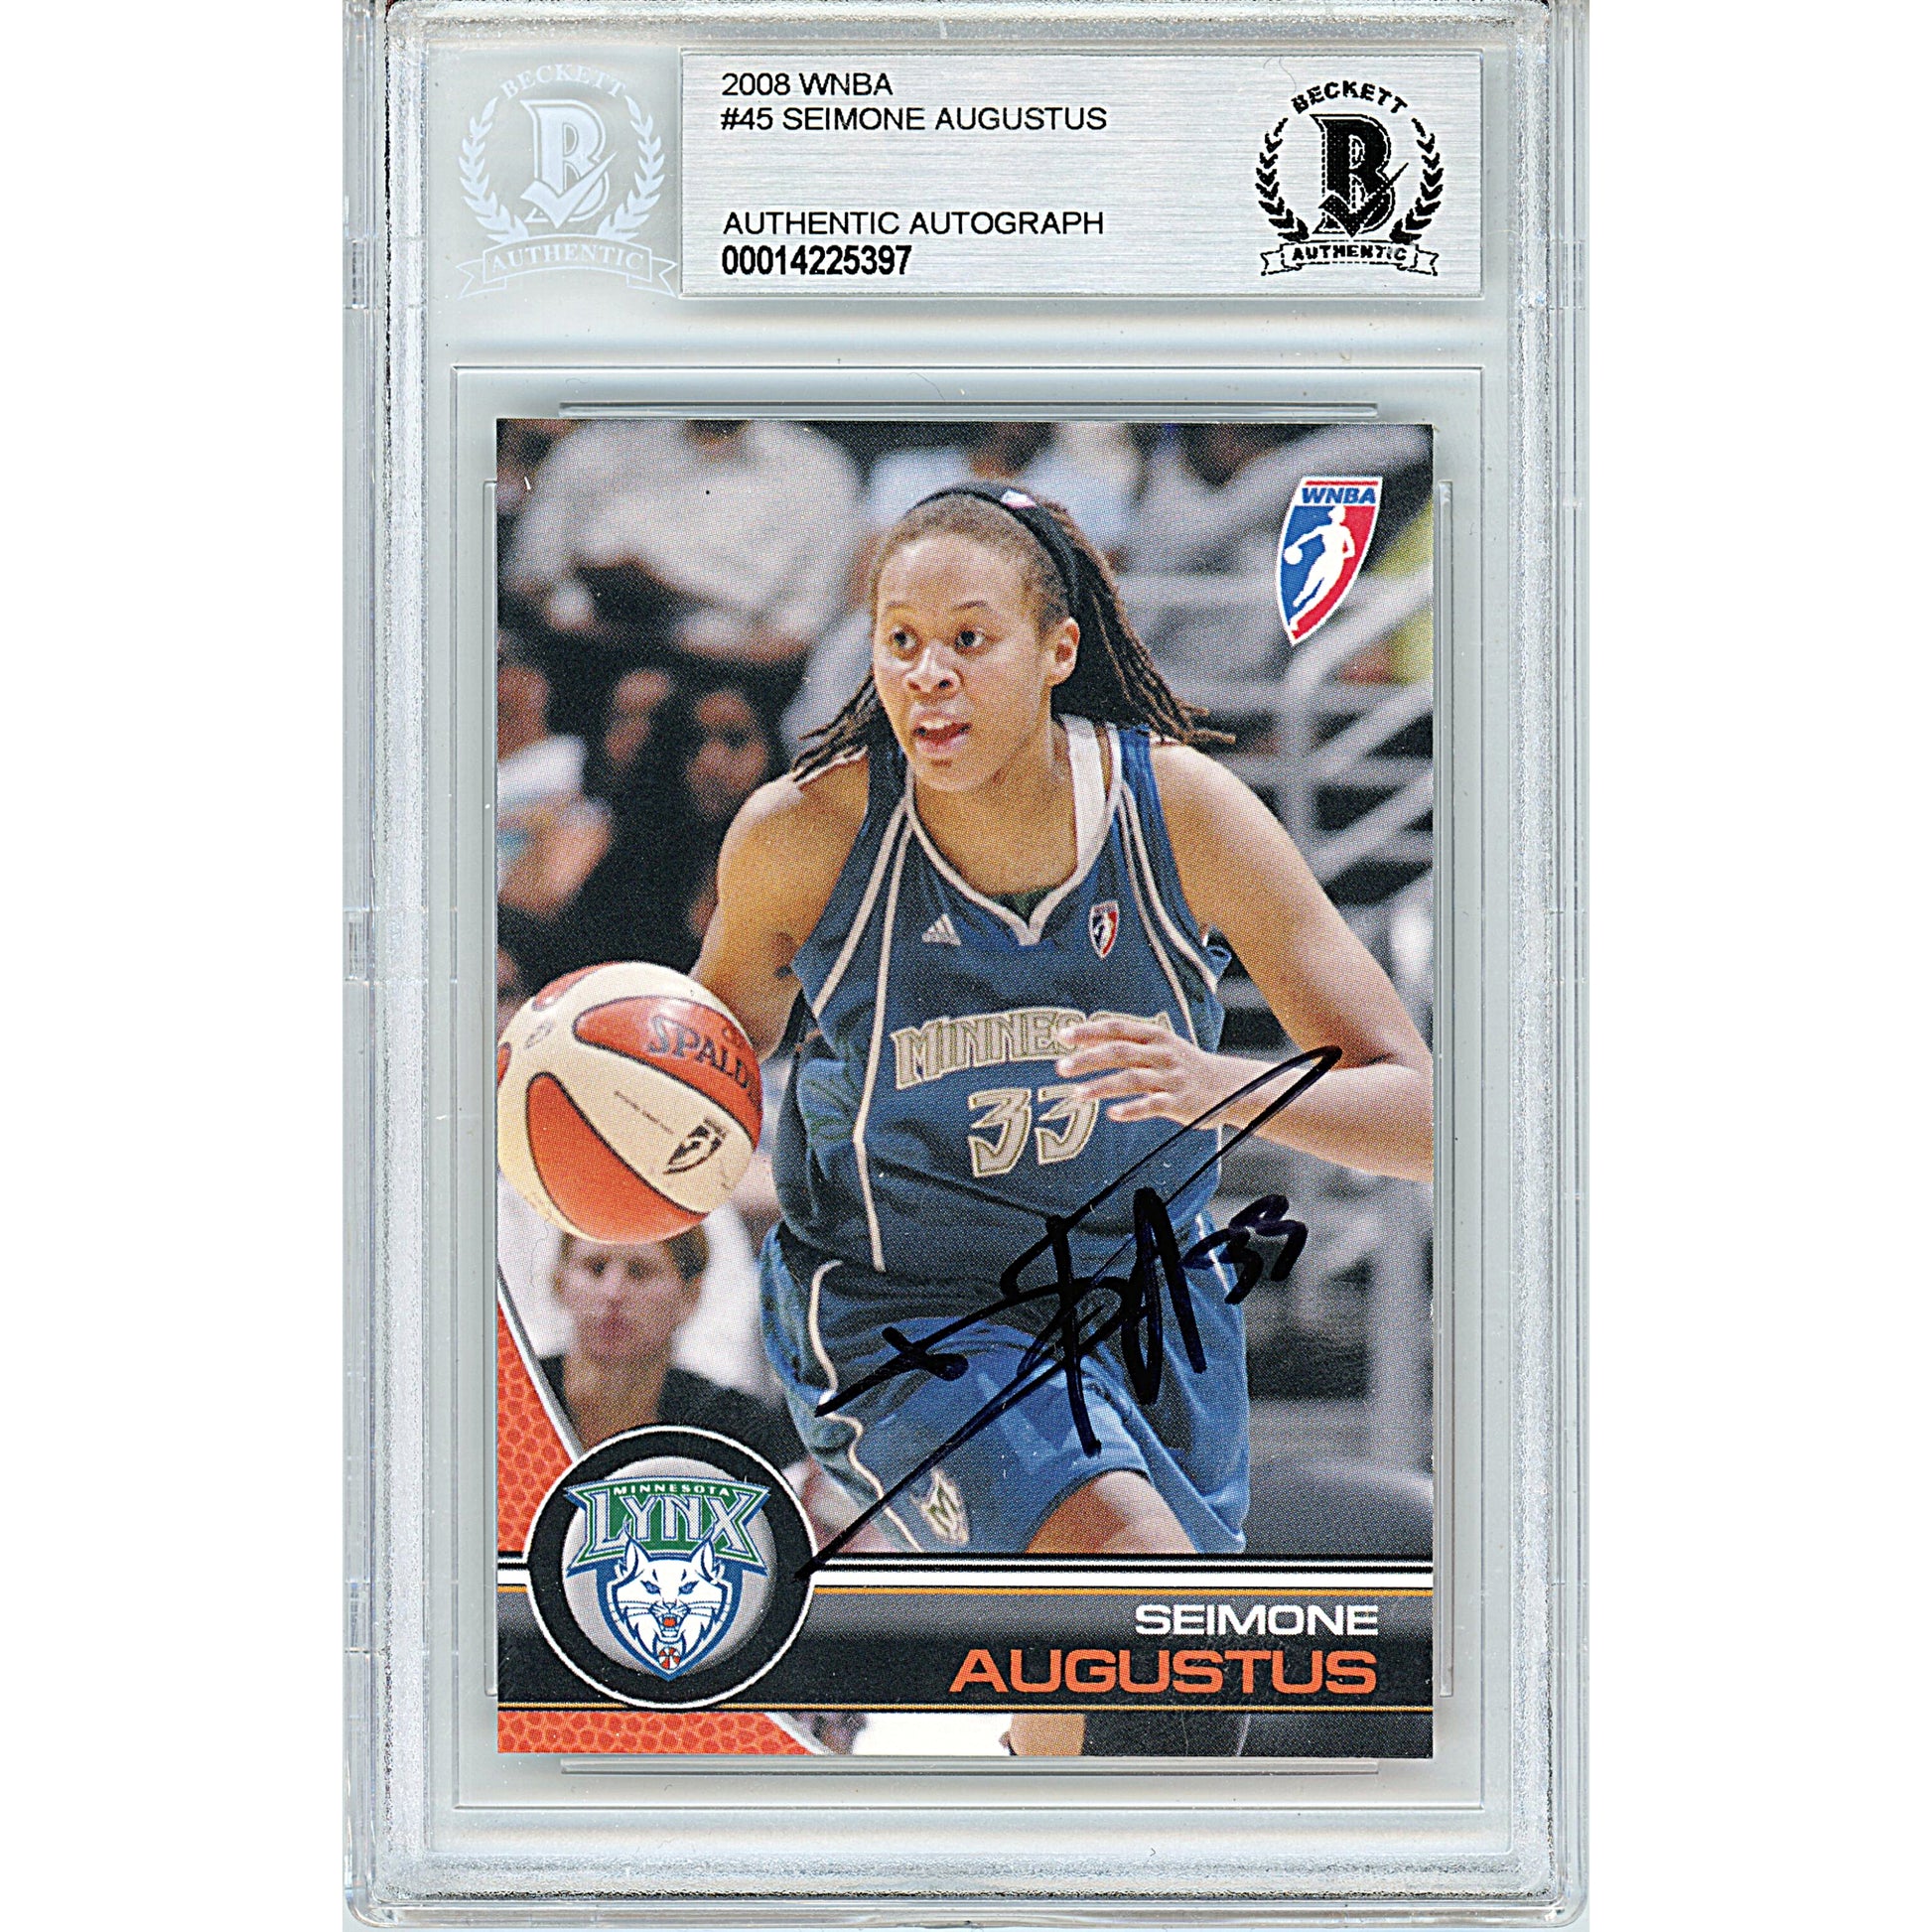 Basketballs- Autographed- Seimone Augustus Signed Minnesota Lynx 2008 WNBA Basketball Card Beckett BAS Slabbed 00014225397 - 101